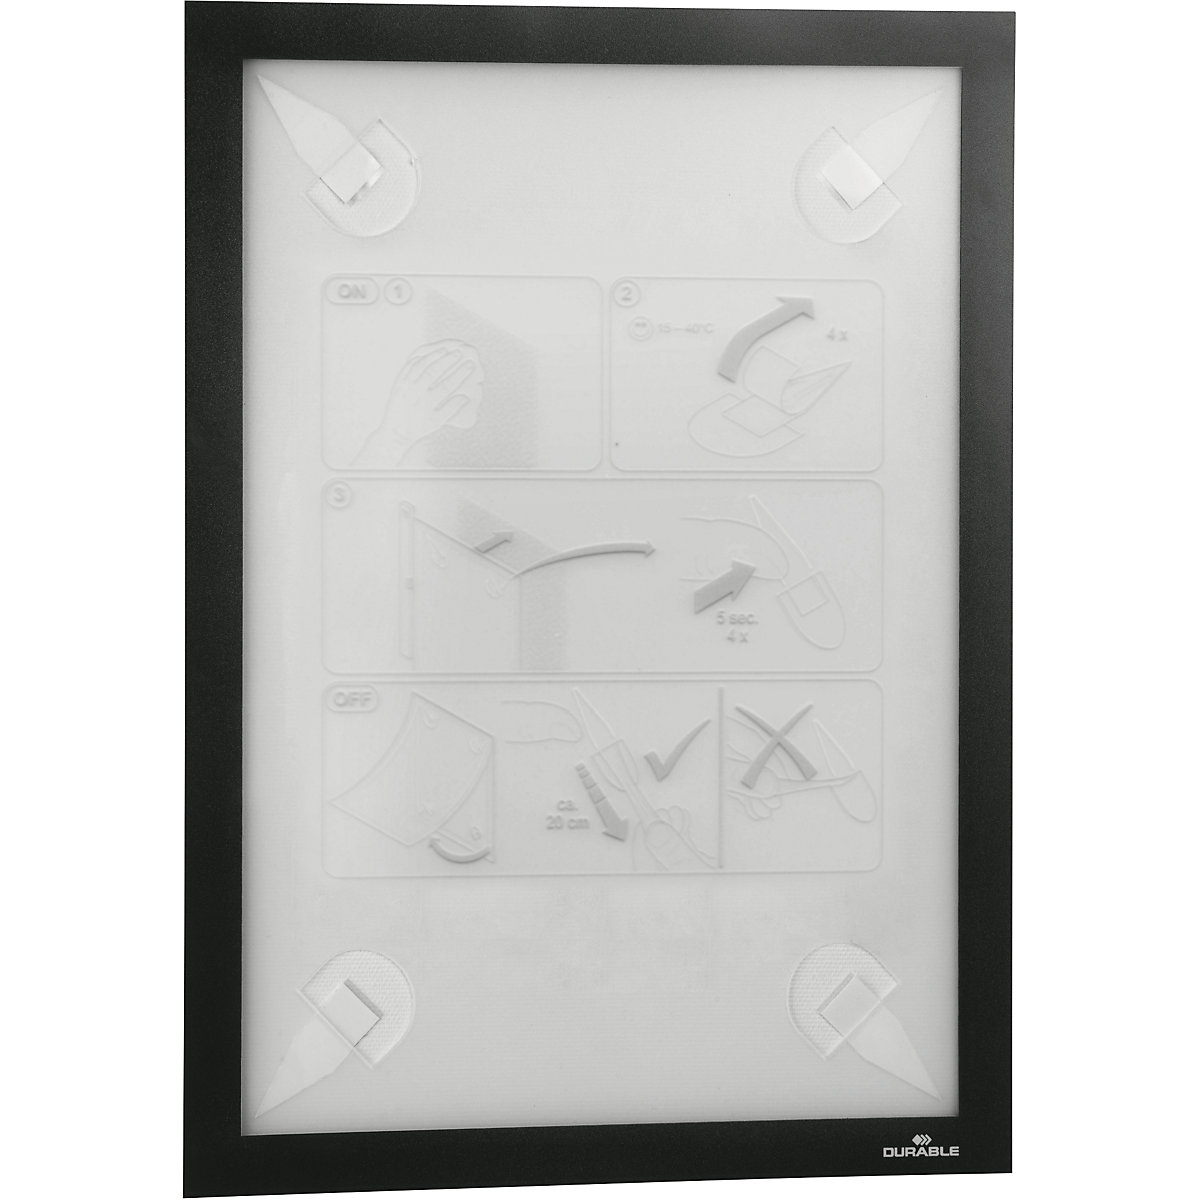 DURAFRAME® WALLPAPER display frame – DURABLE